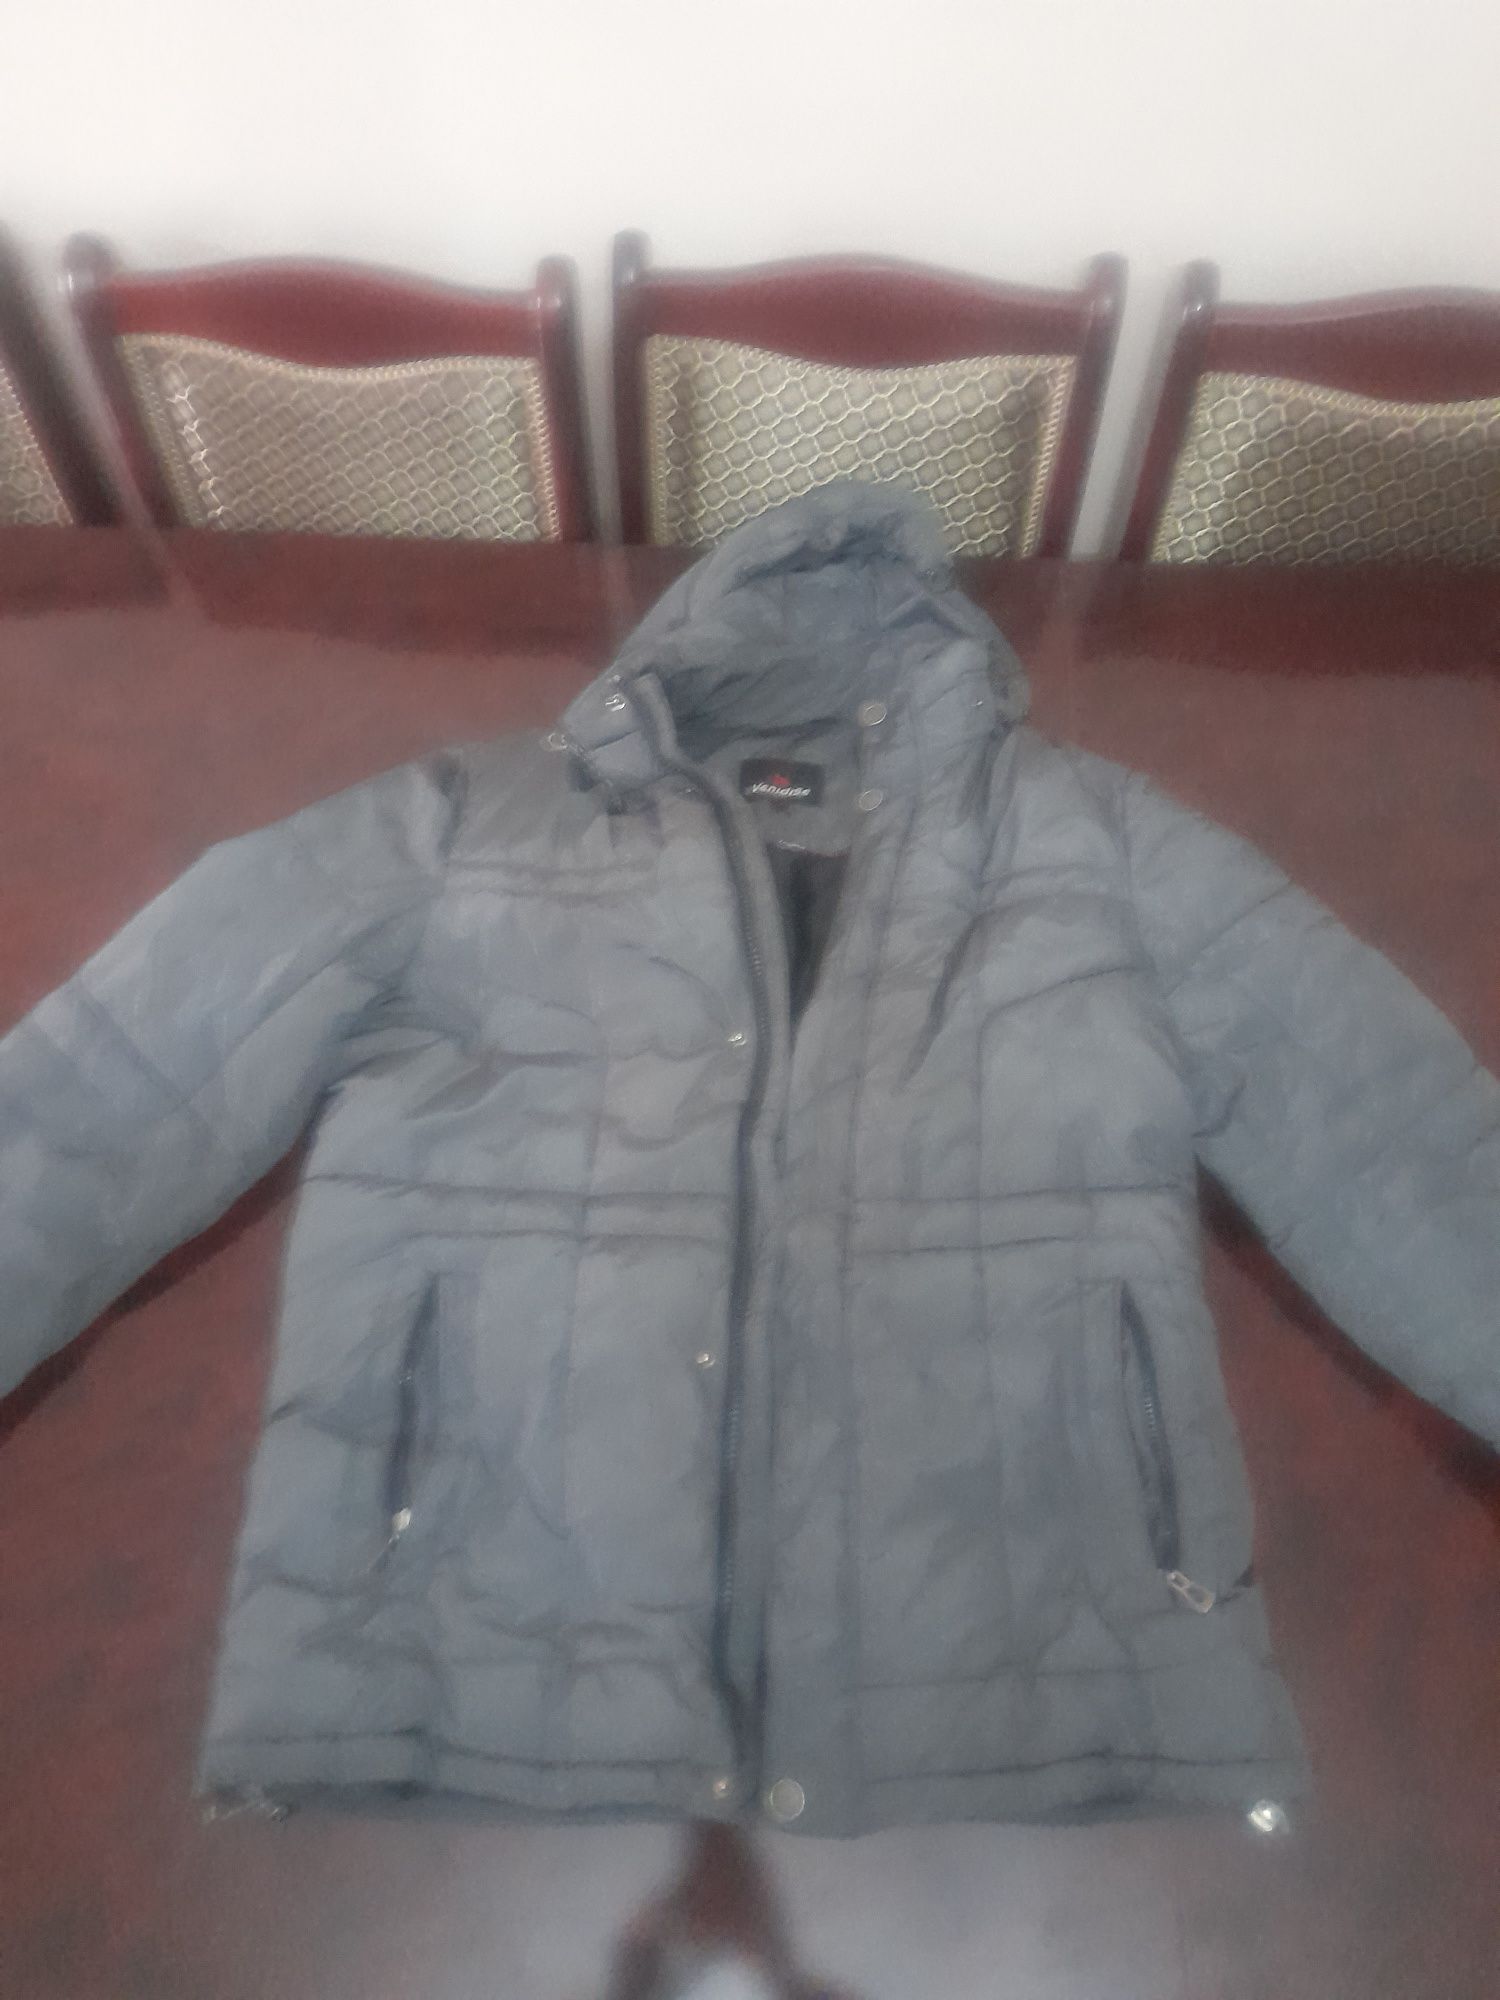 Продам зимнюю мужскую куртку